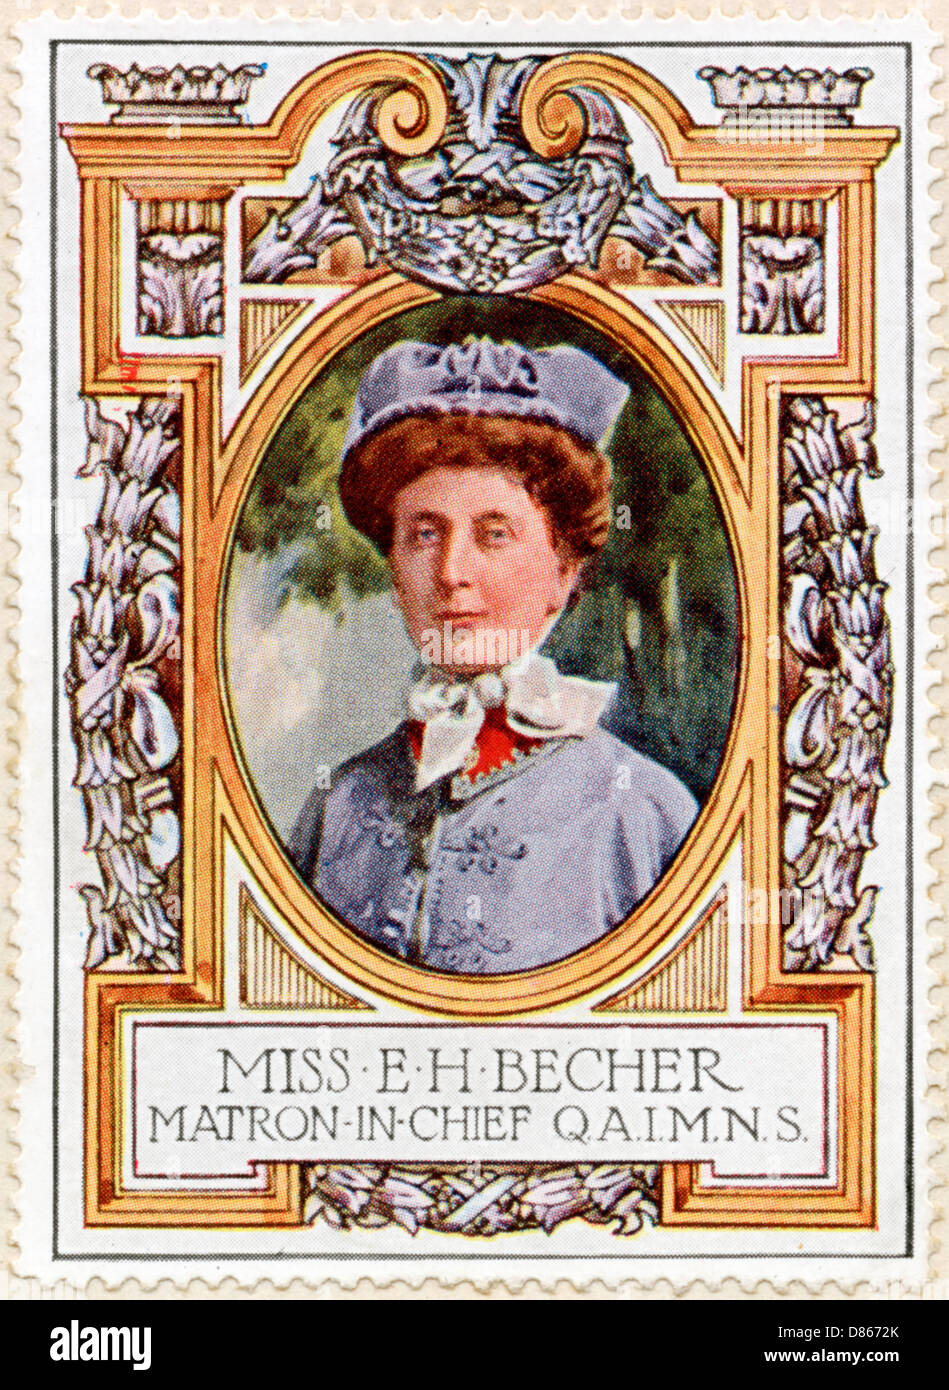 Dame Ethel Becher Stamp Stock Photo